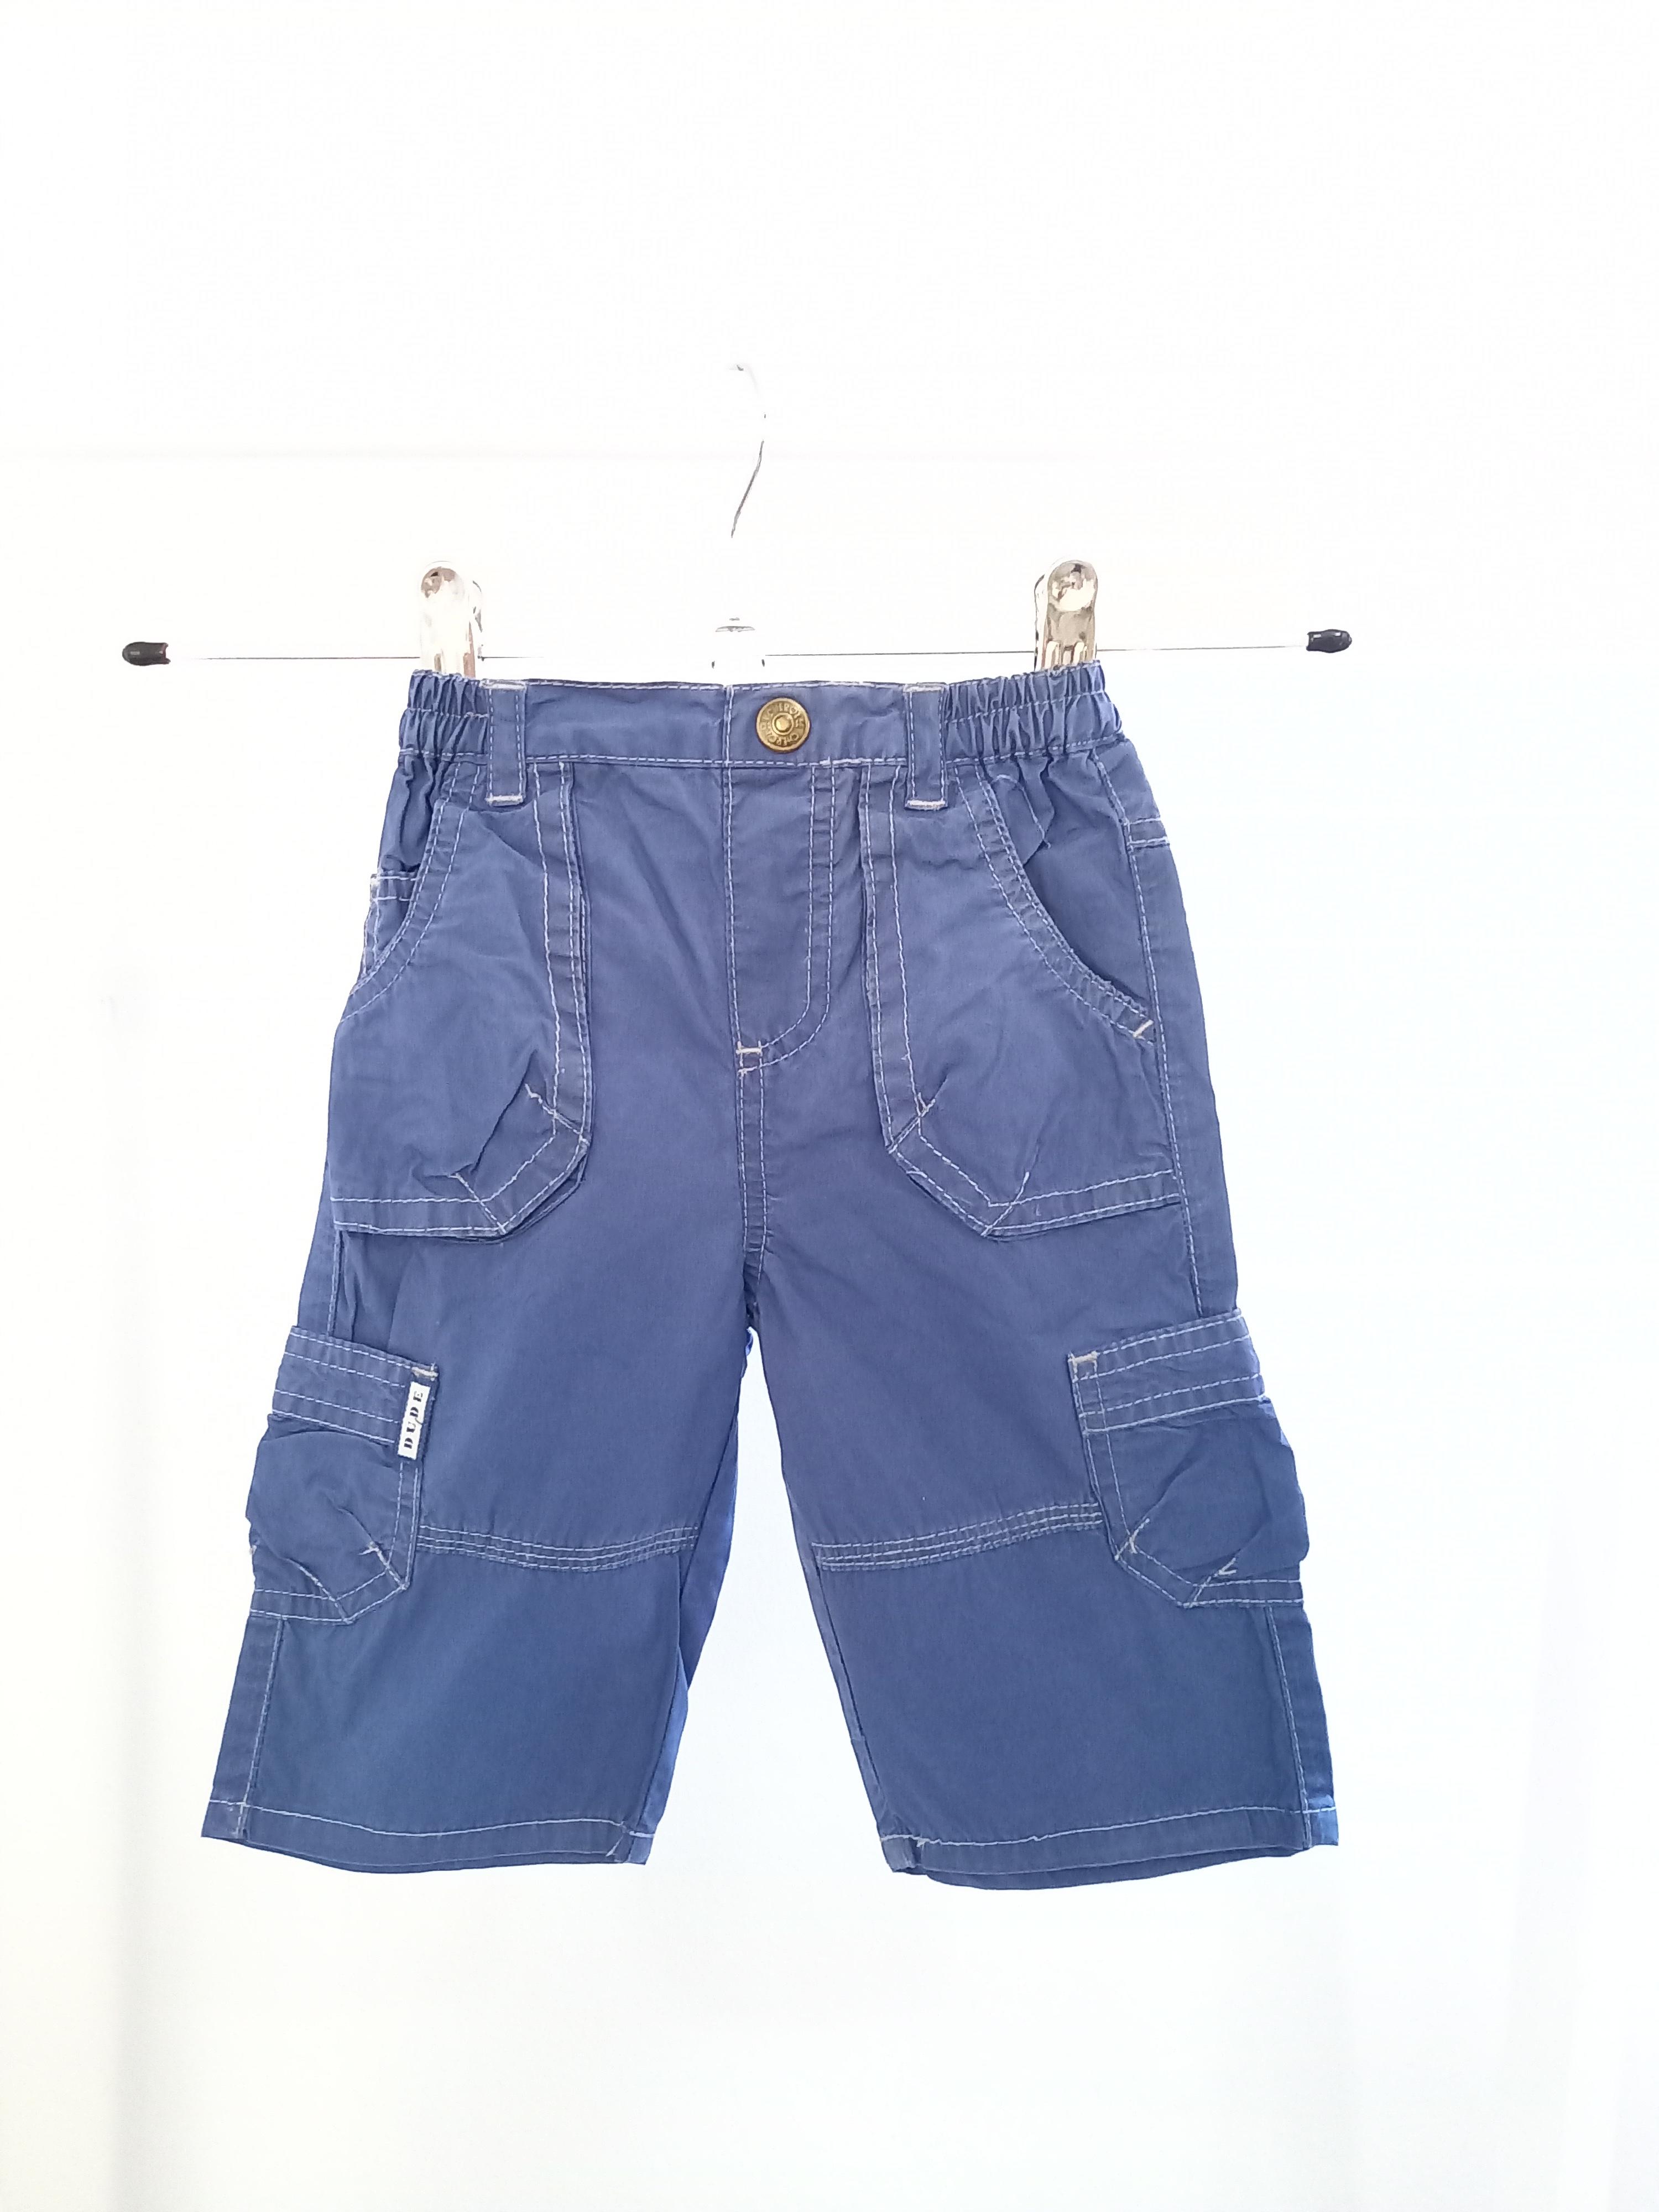 Buy Vintage 1990s Riders Denim Jeans Girl Boy 5-6 Years Trousers Pants Blue  Retro Online in India - Etsy